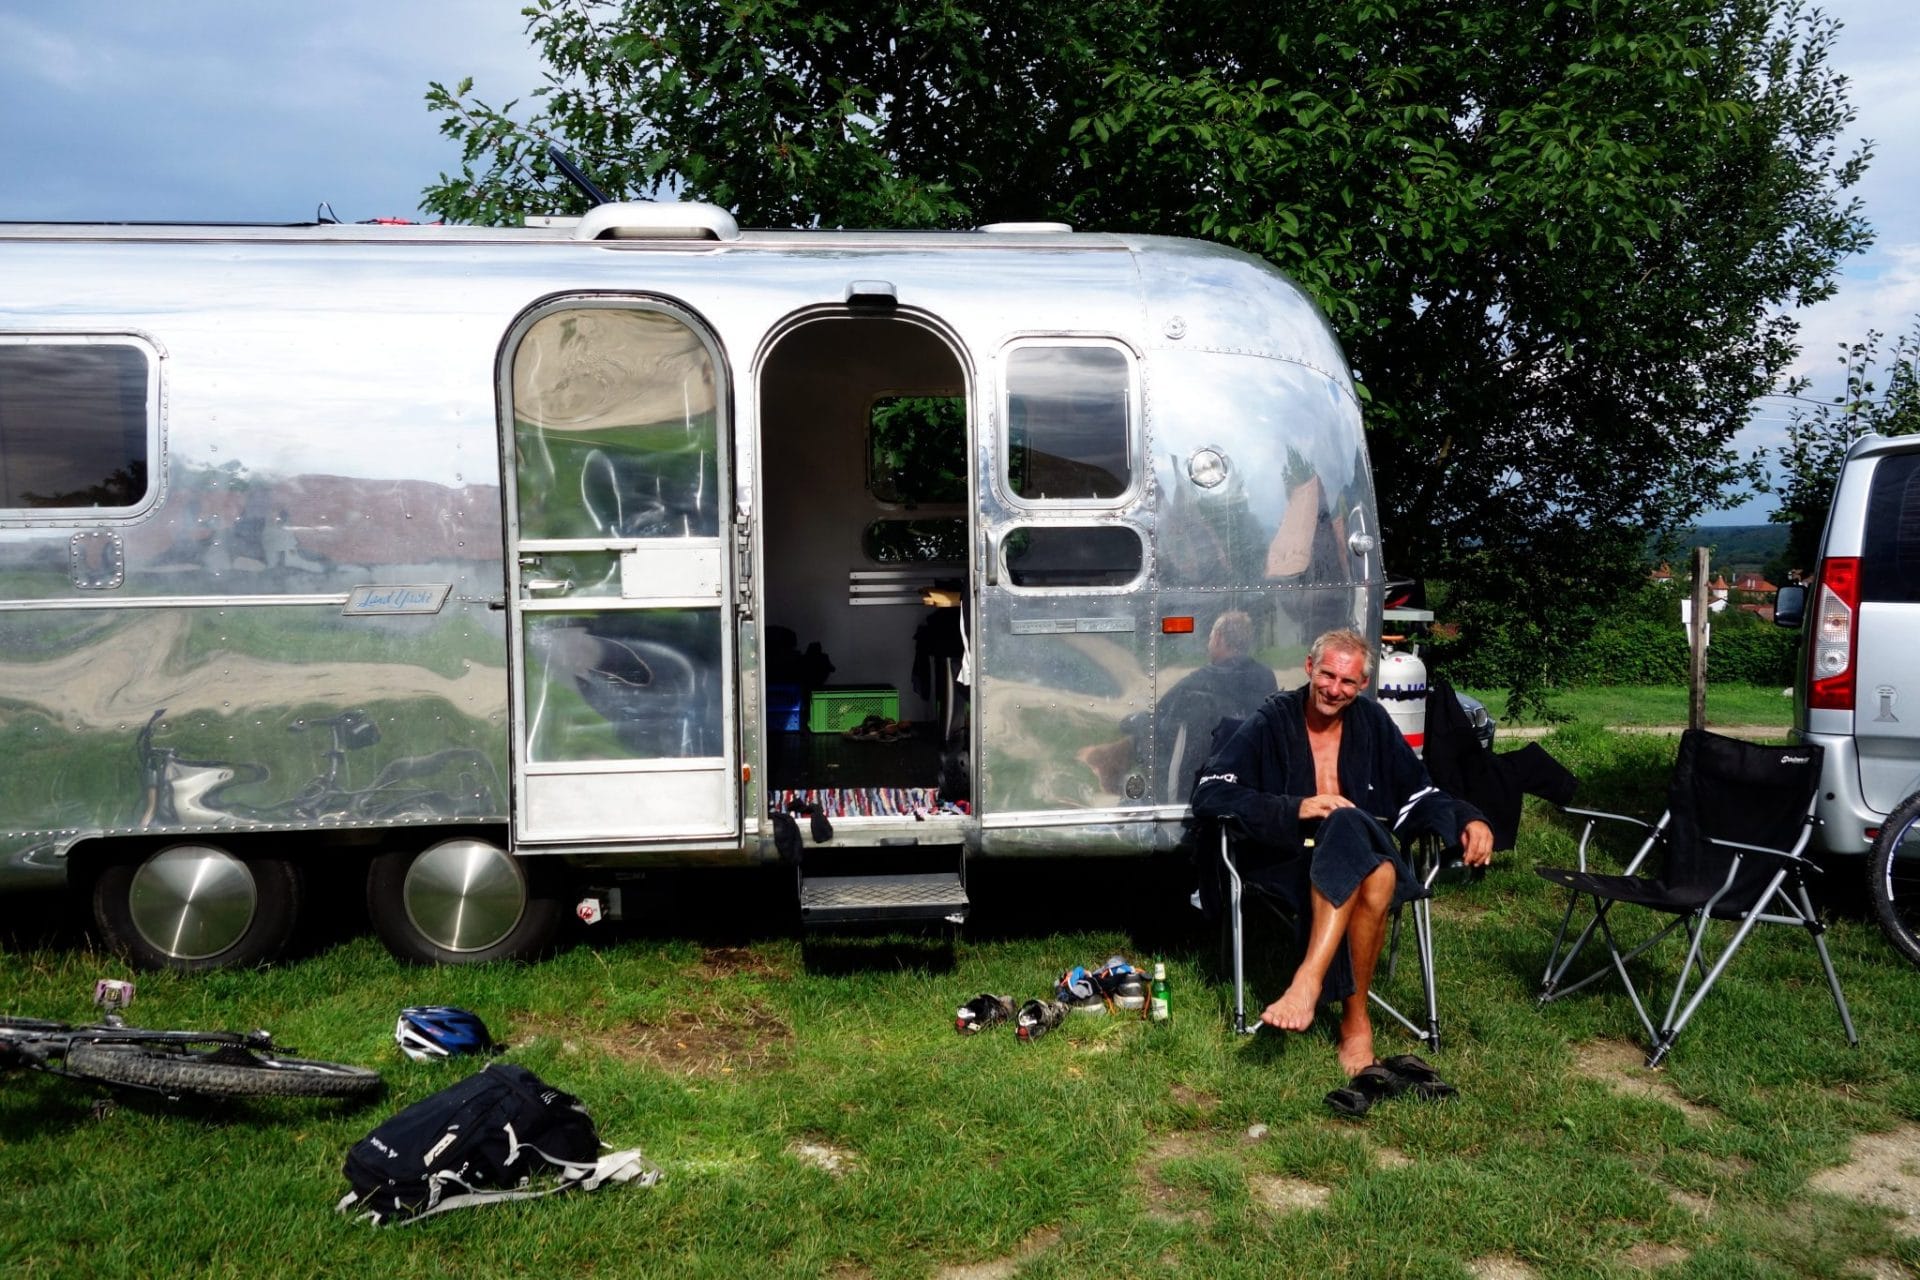 Rumania-Camping-Airstream-Life